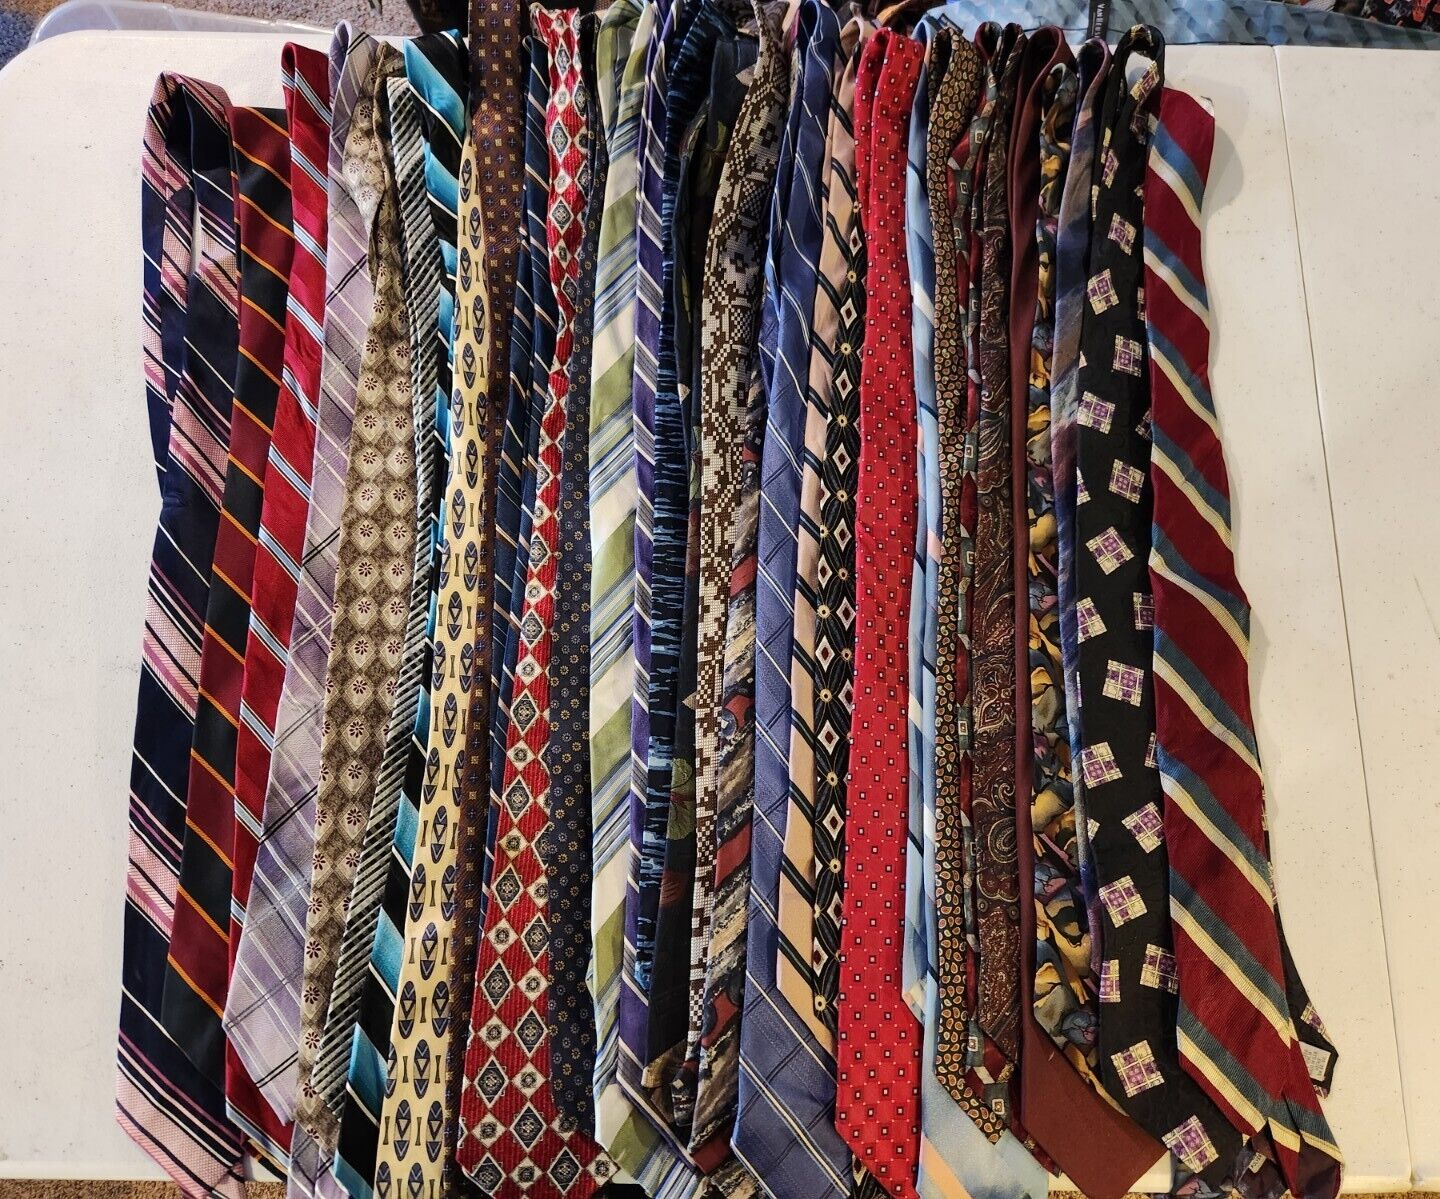 Men’s Modern/Vintage Neck Tie Lot Of 25 For Wear or Craft Or Reselling 